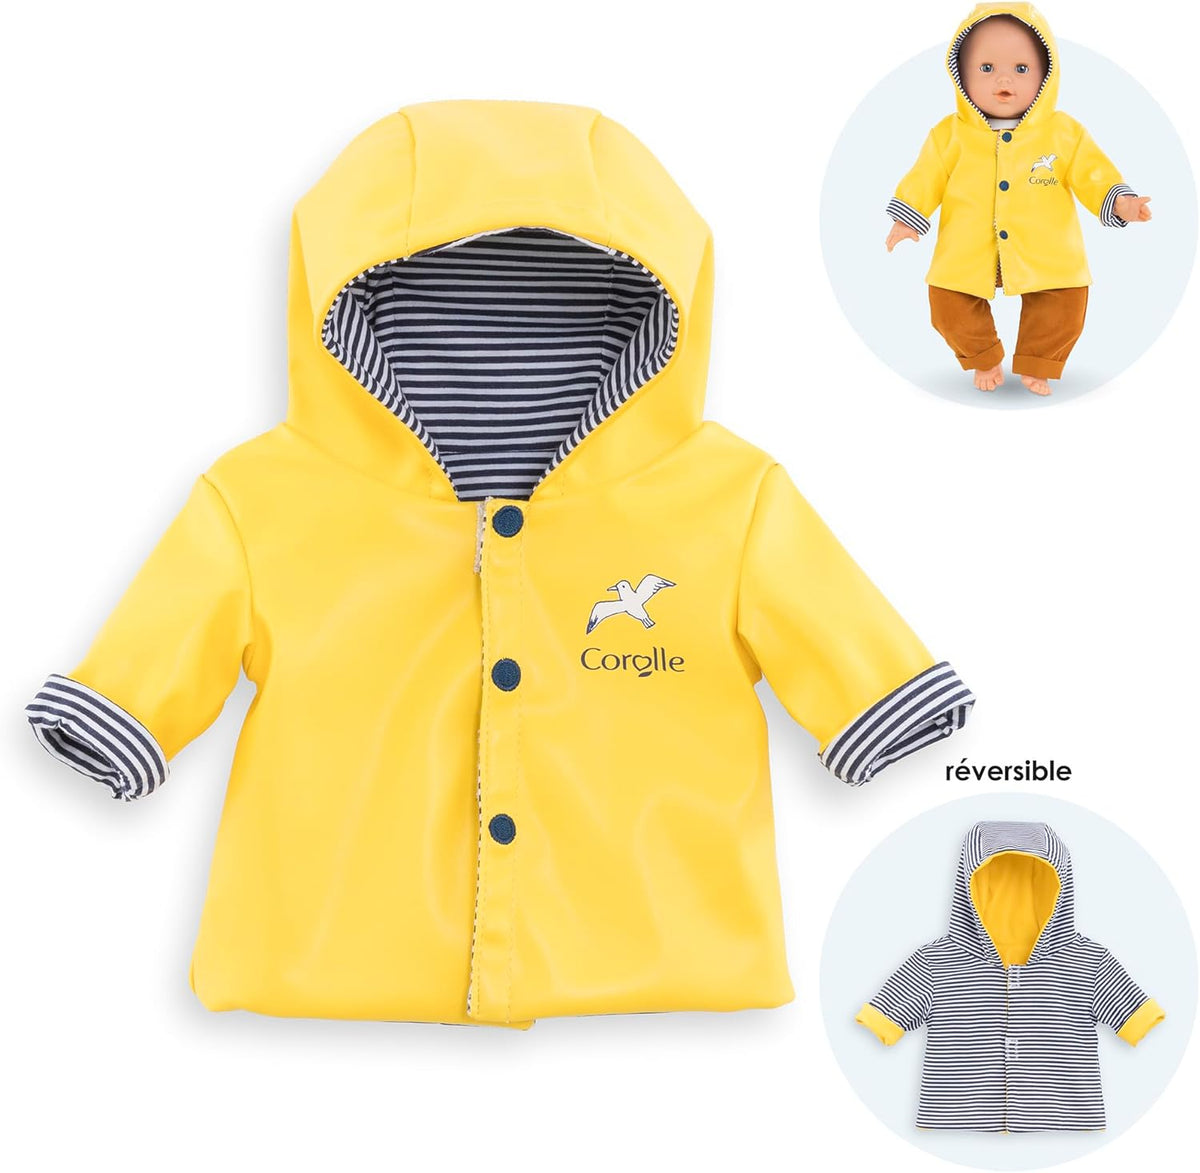 12” Doll Clothes - Reversible Raincoat